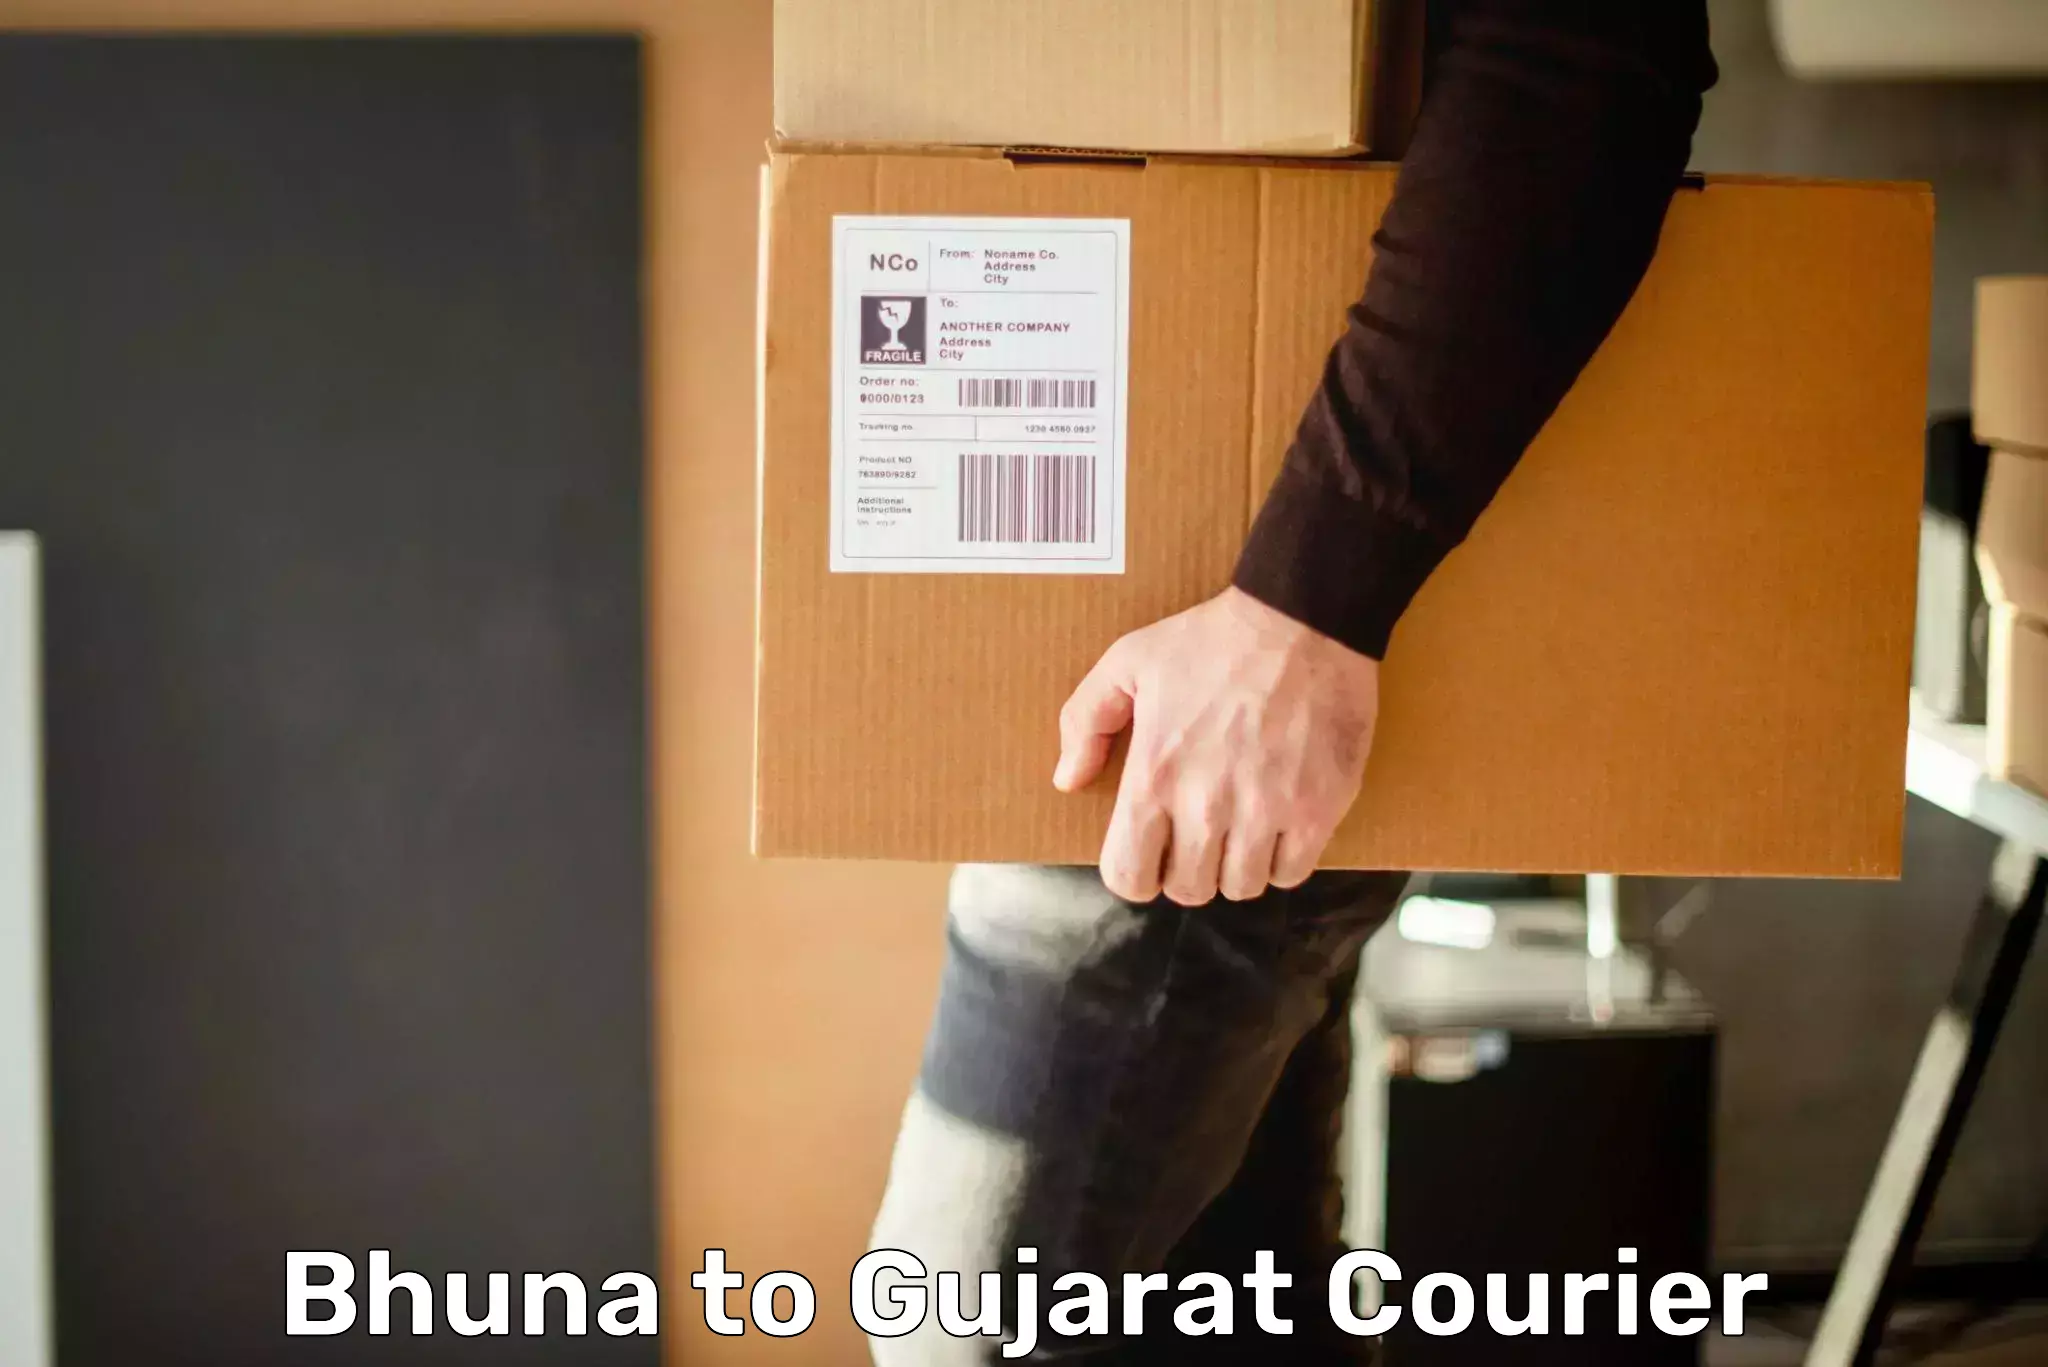 Professional courier handling Bhuna to Gujarat